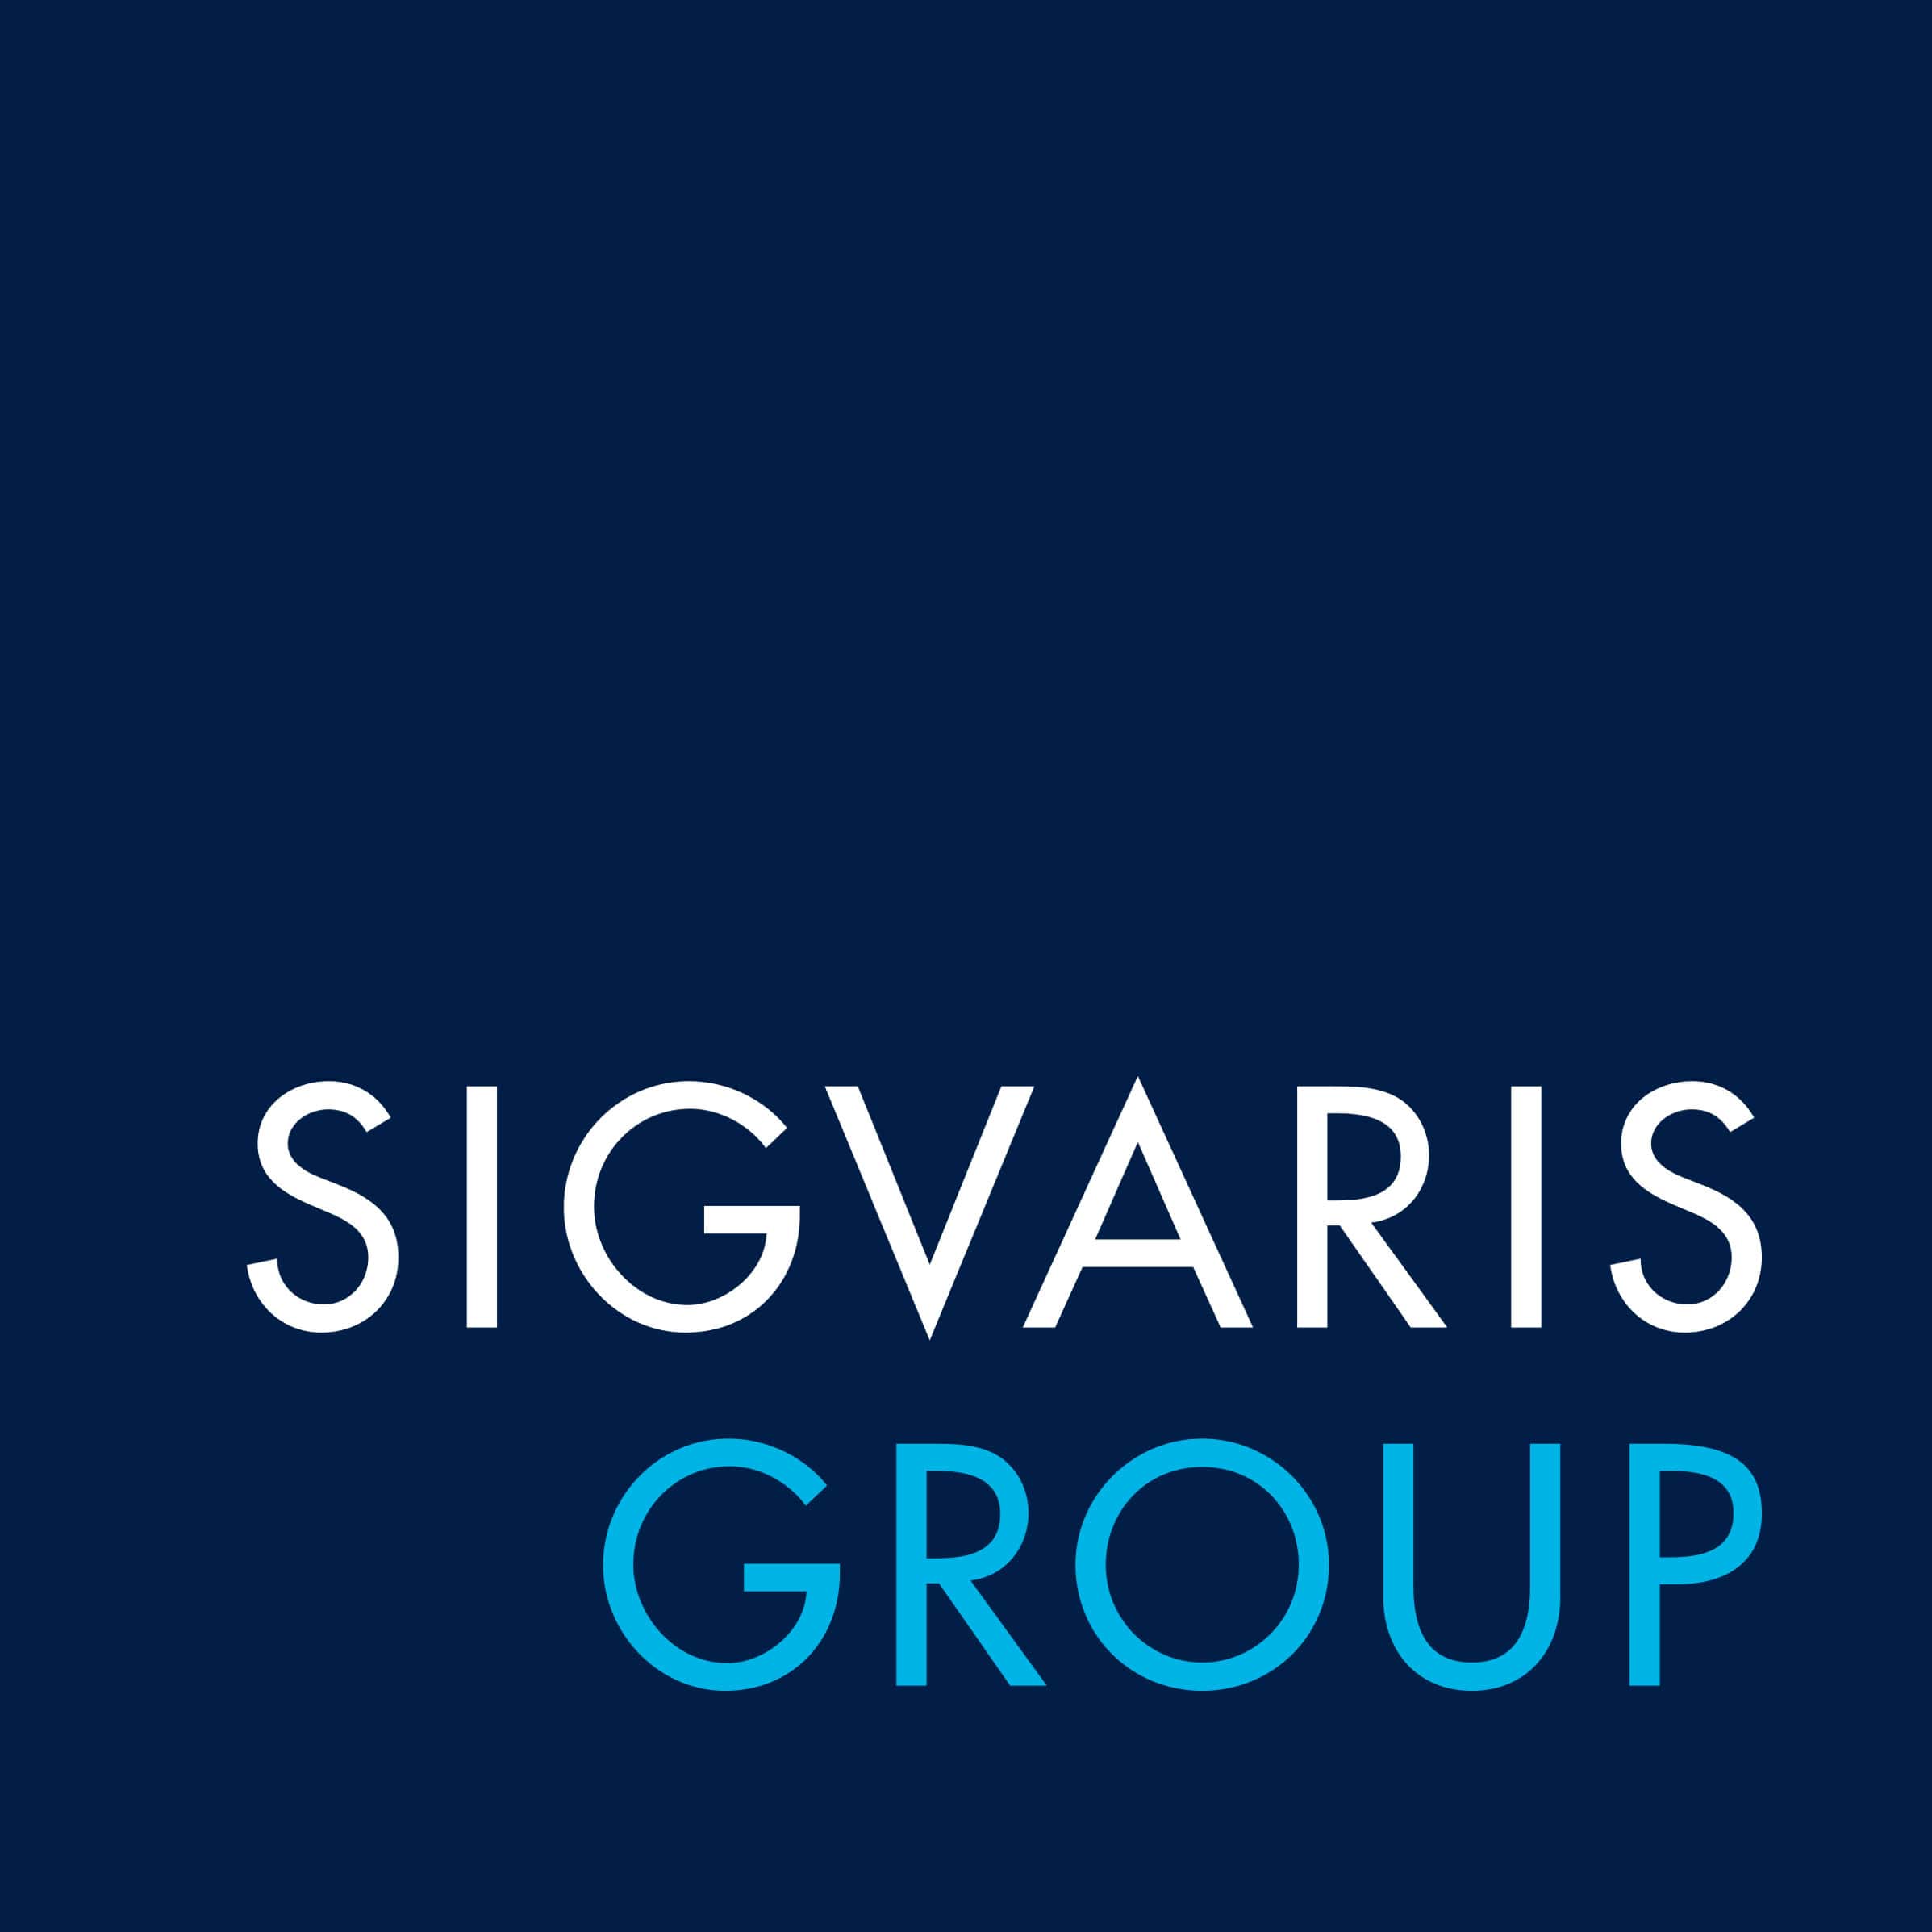 Sigvaris Group logo